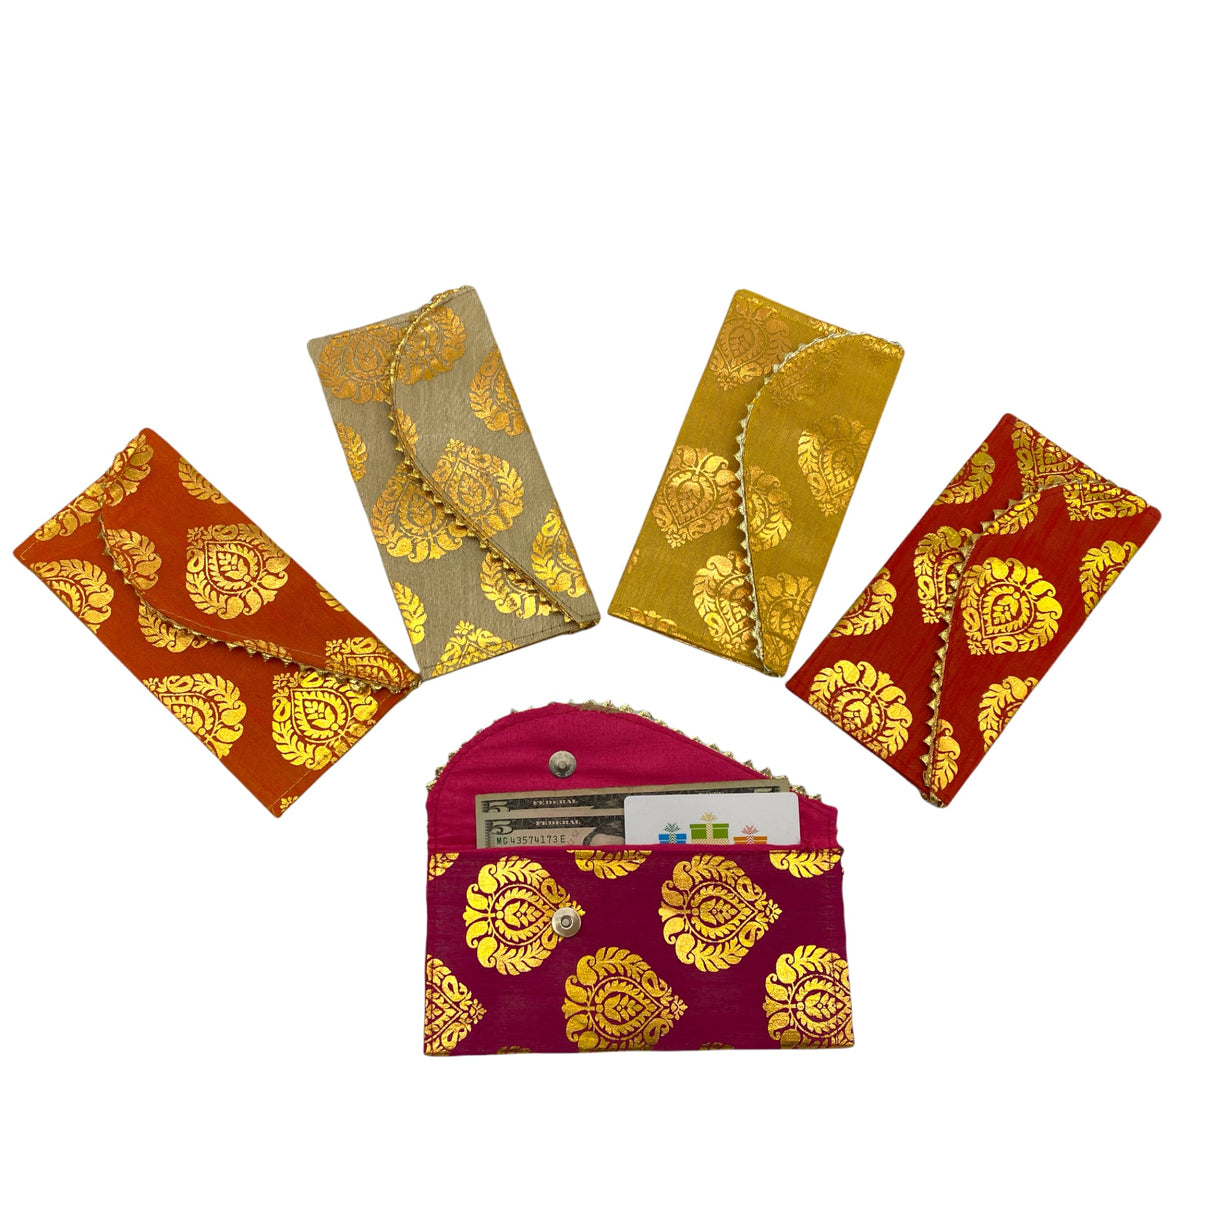 Pack of 5 fabric money envelopes for cash decorative gotta